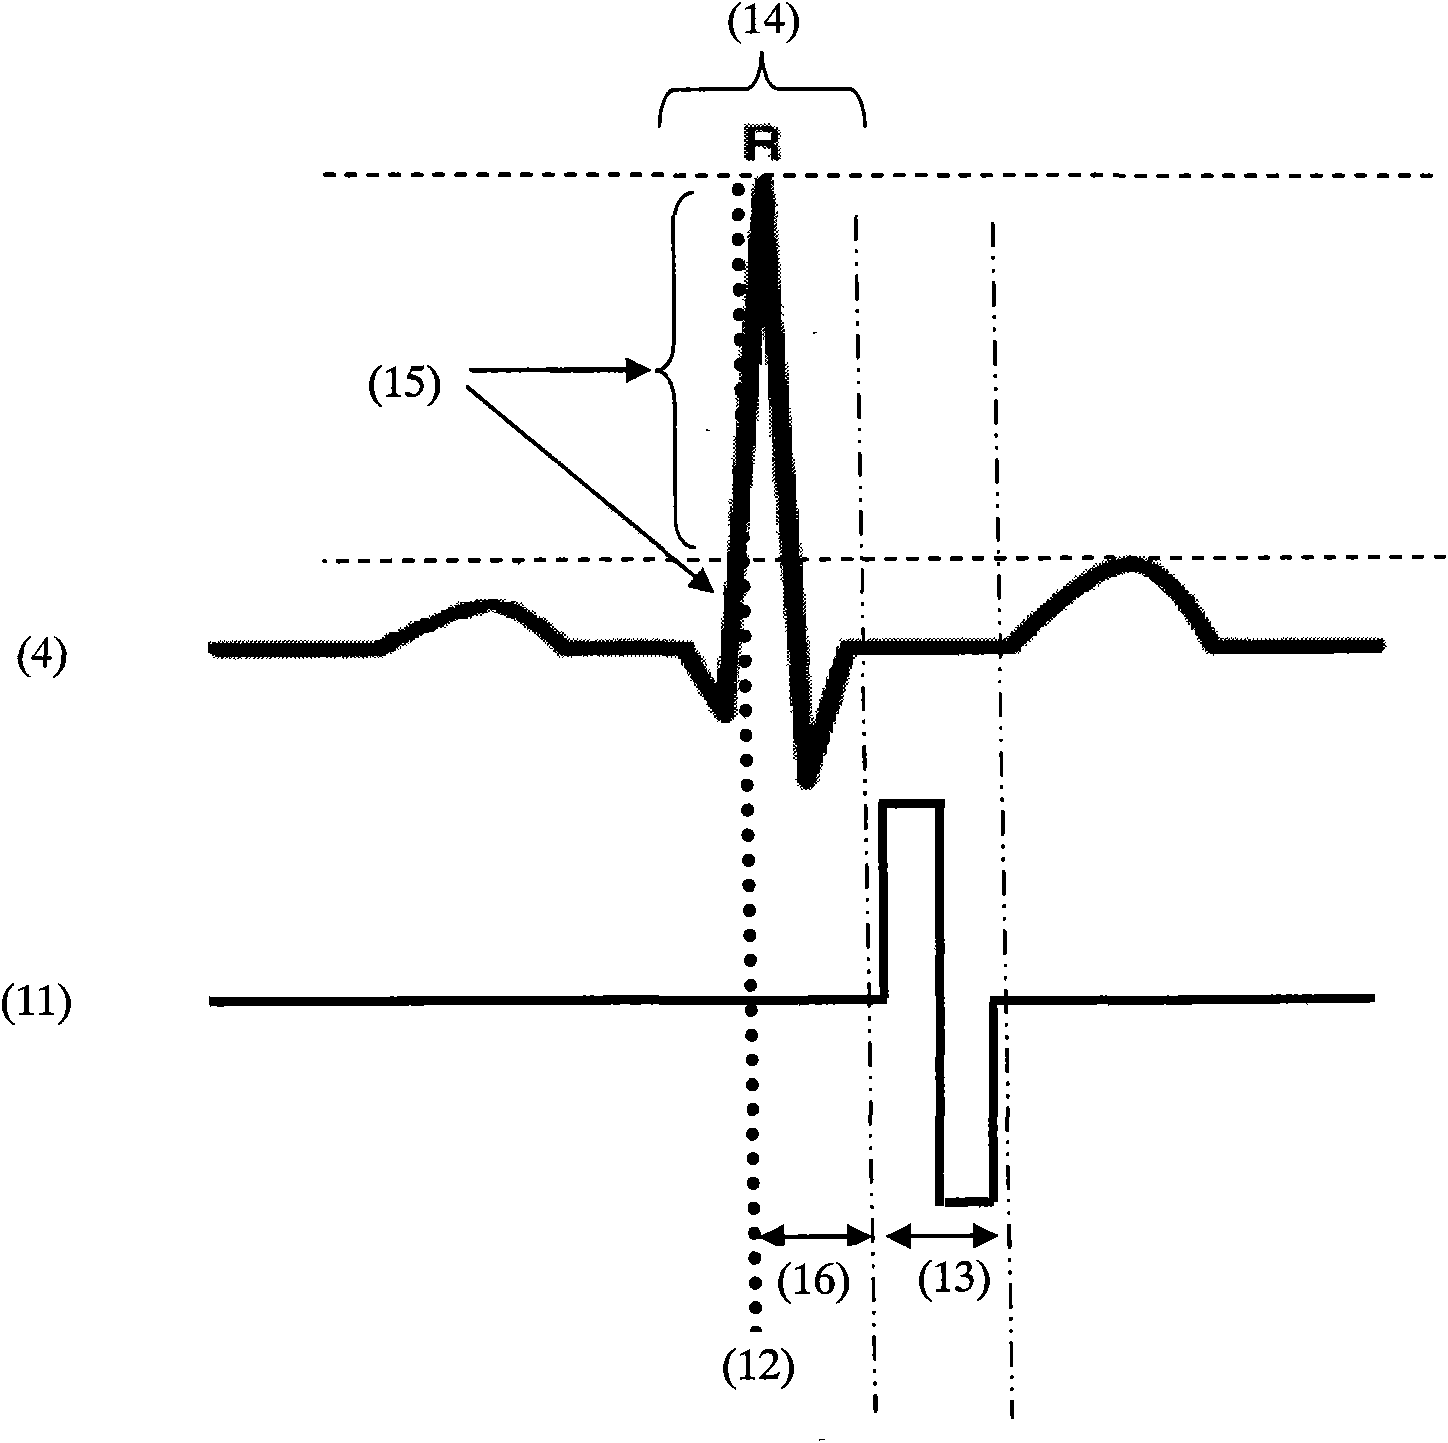 In-vitro percutaneous cardiac contractile force regulation